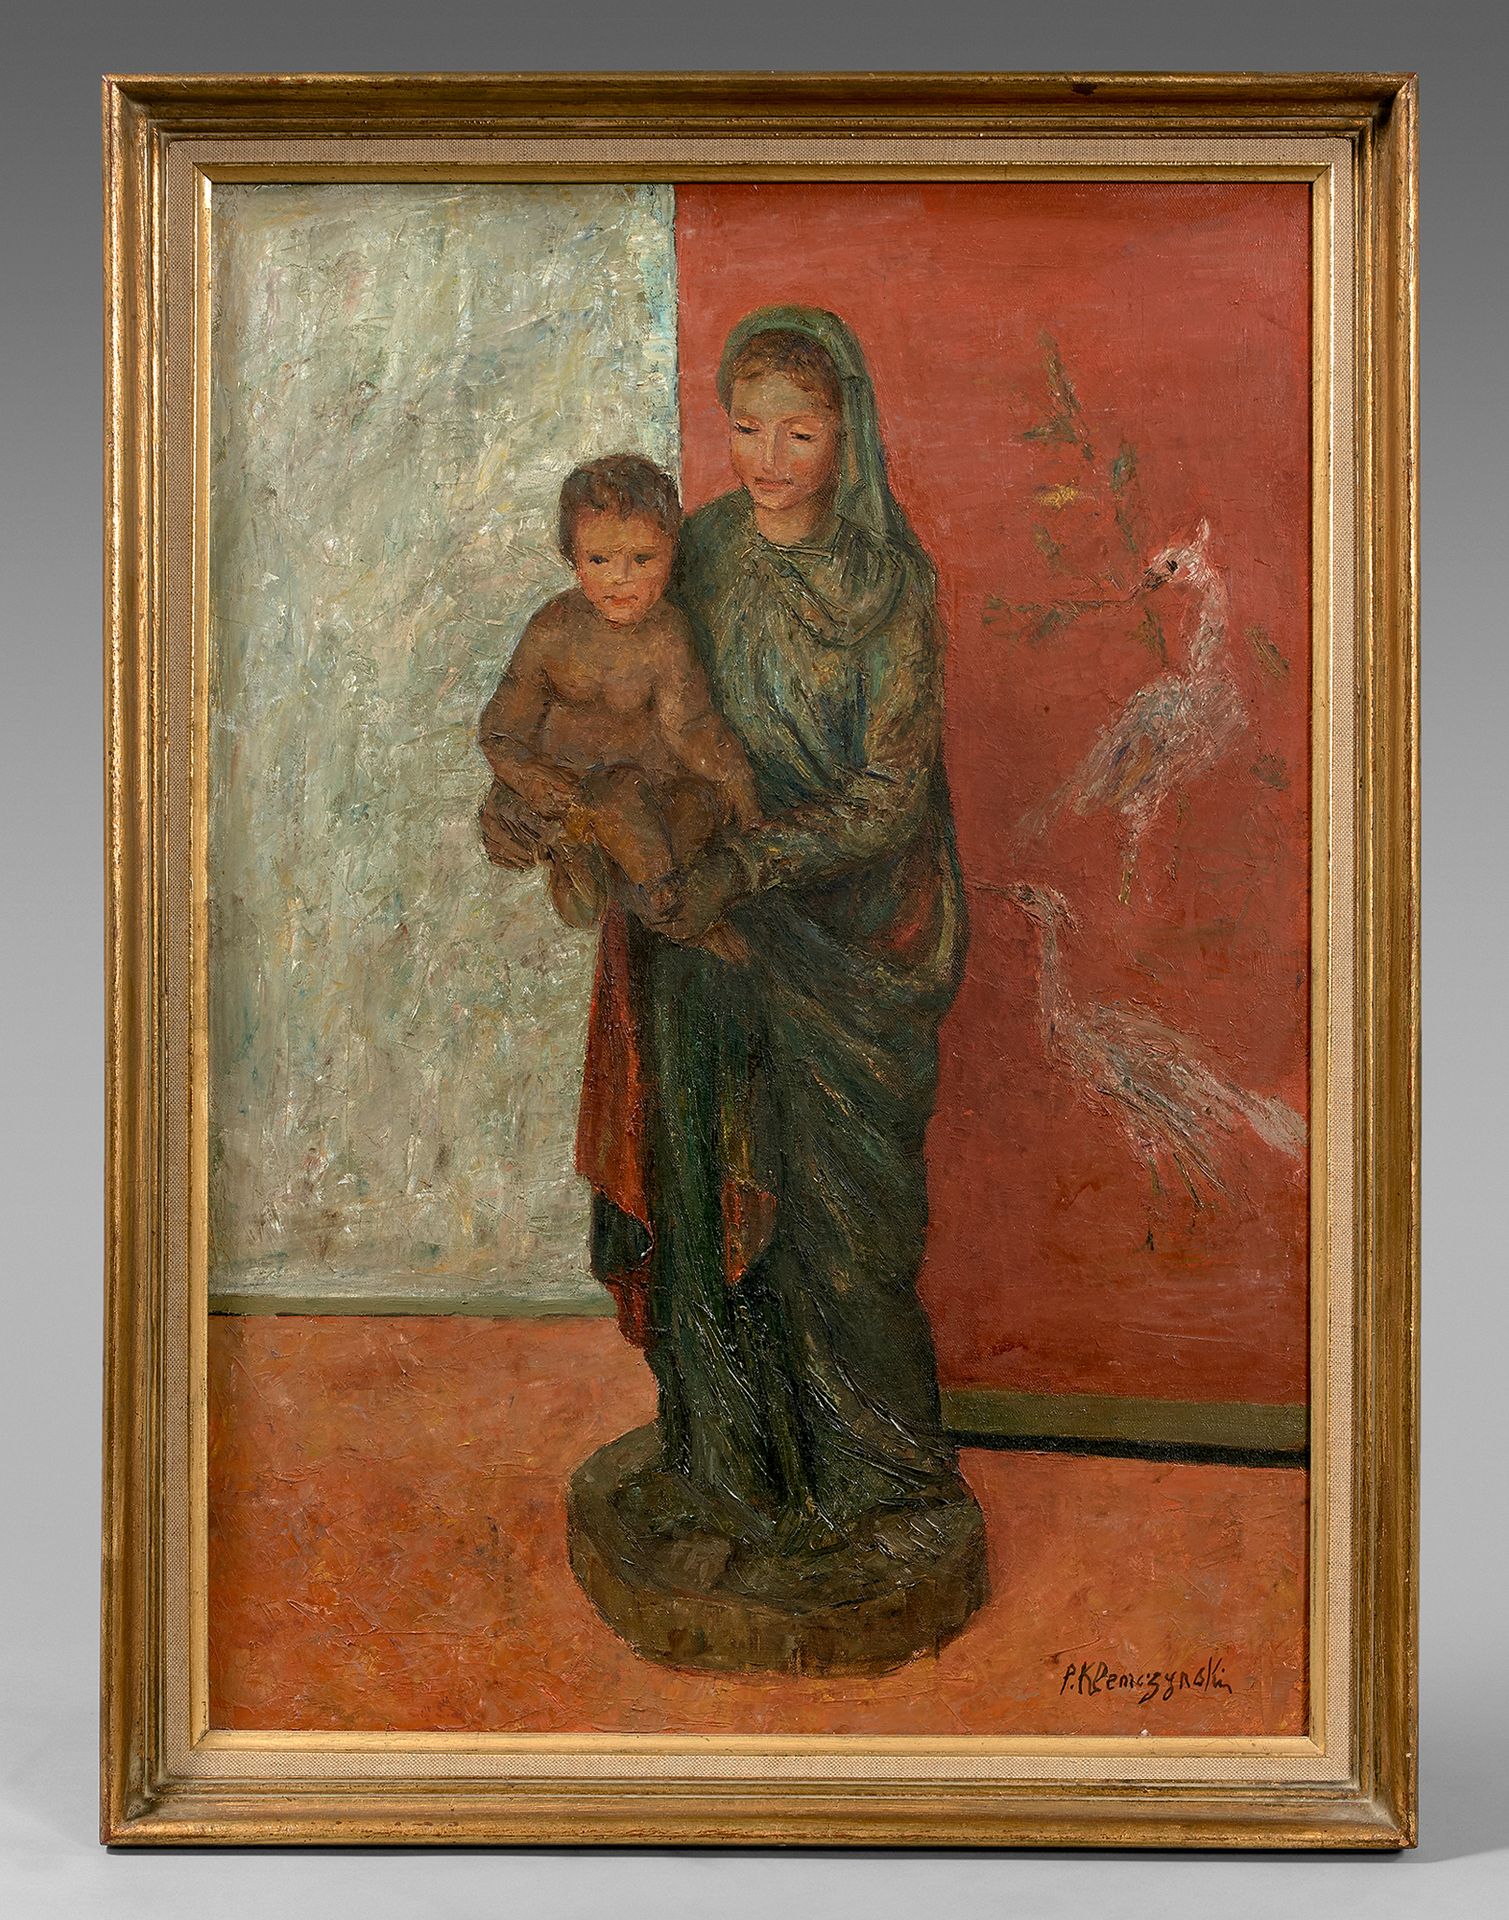 Pierre KLEMCZYNSKI 圣母与儿童
布面油画，右下方签名。
63 x 45 cm